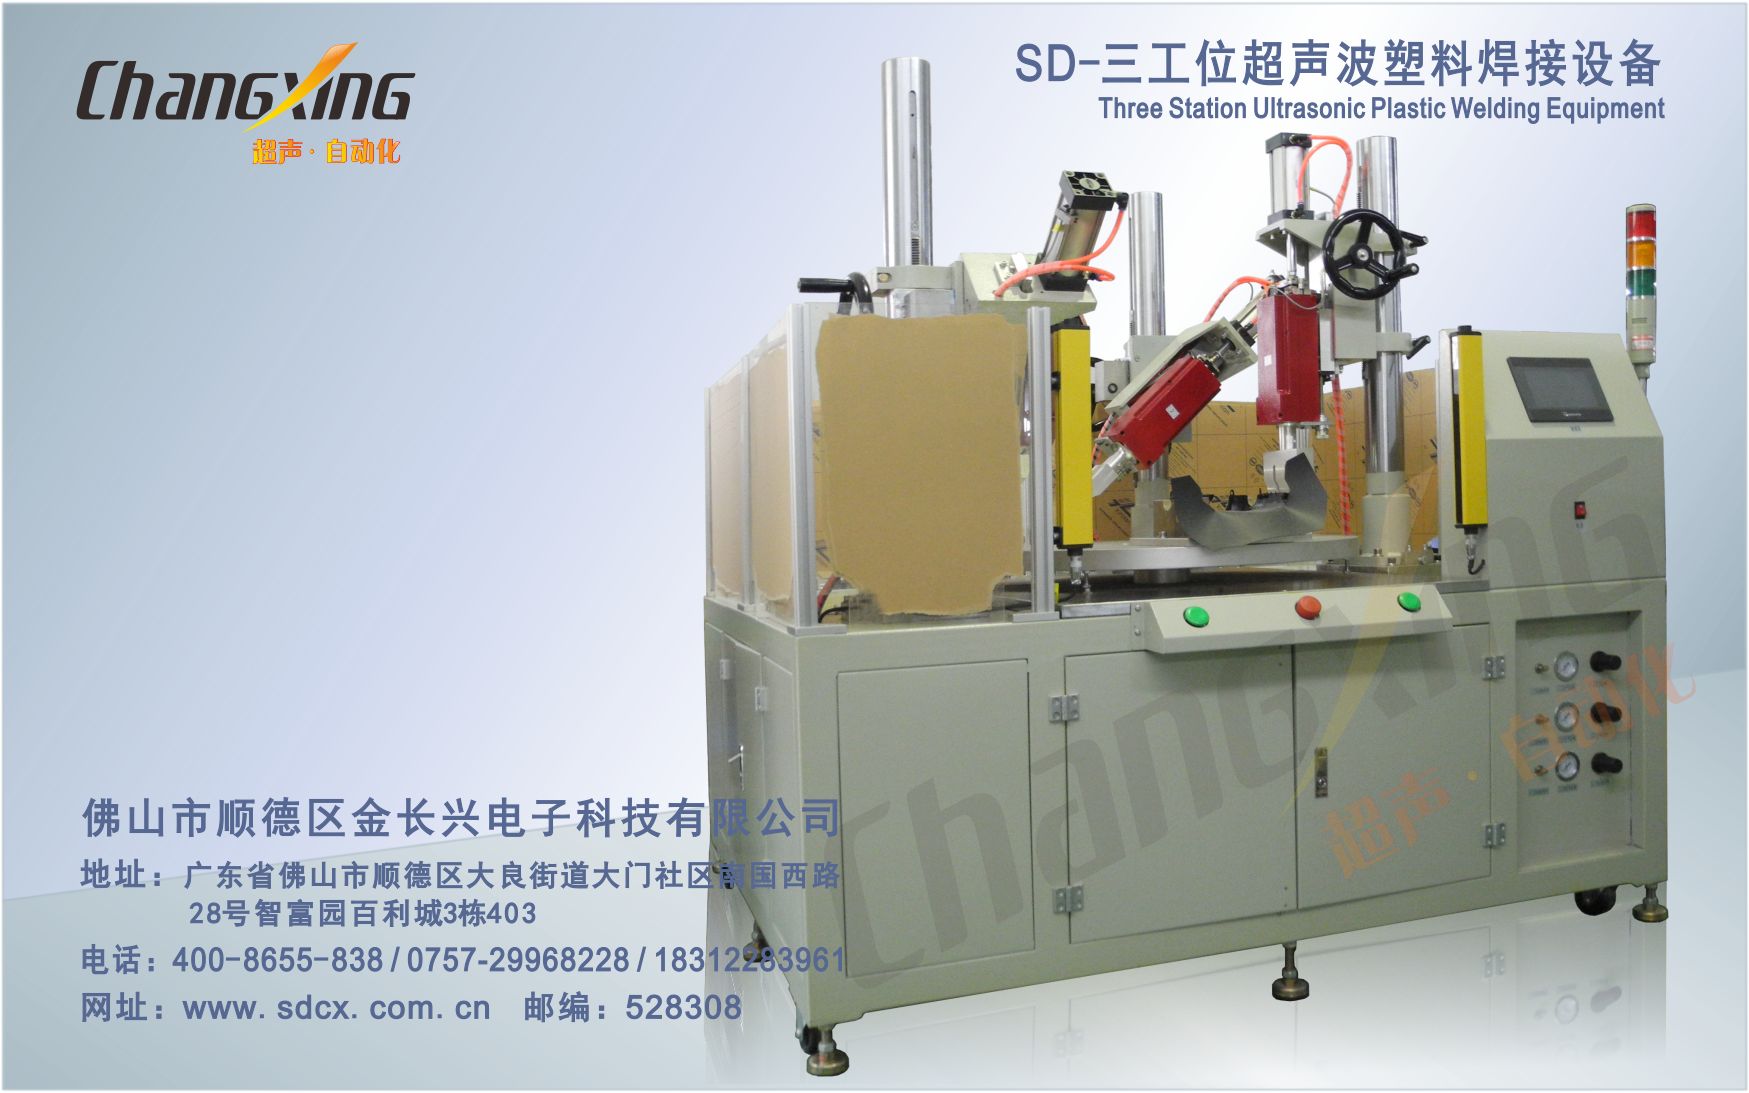 SD-三工位超声波塑料焊接设备